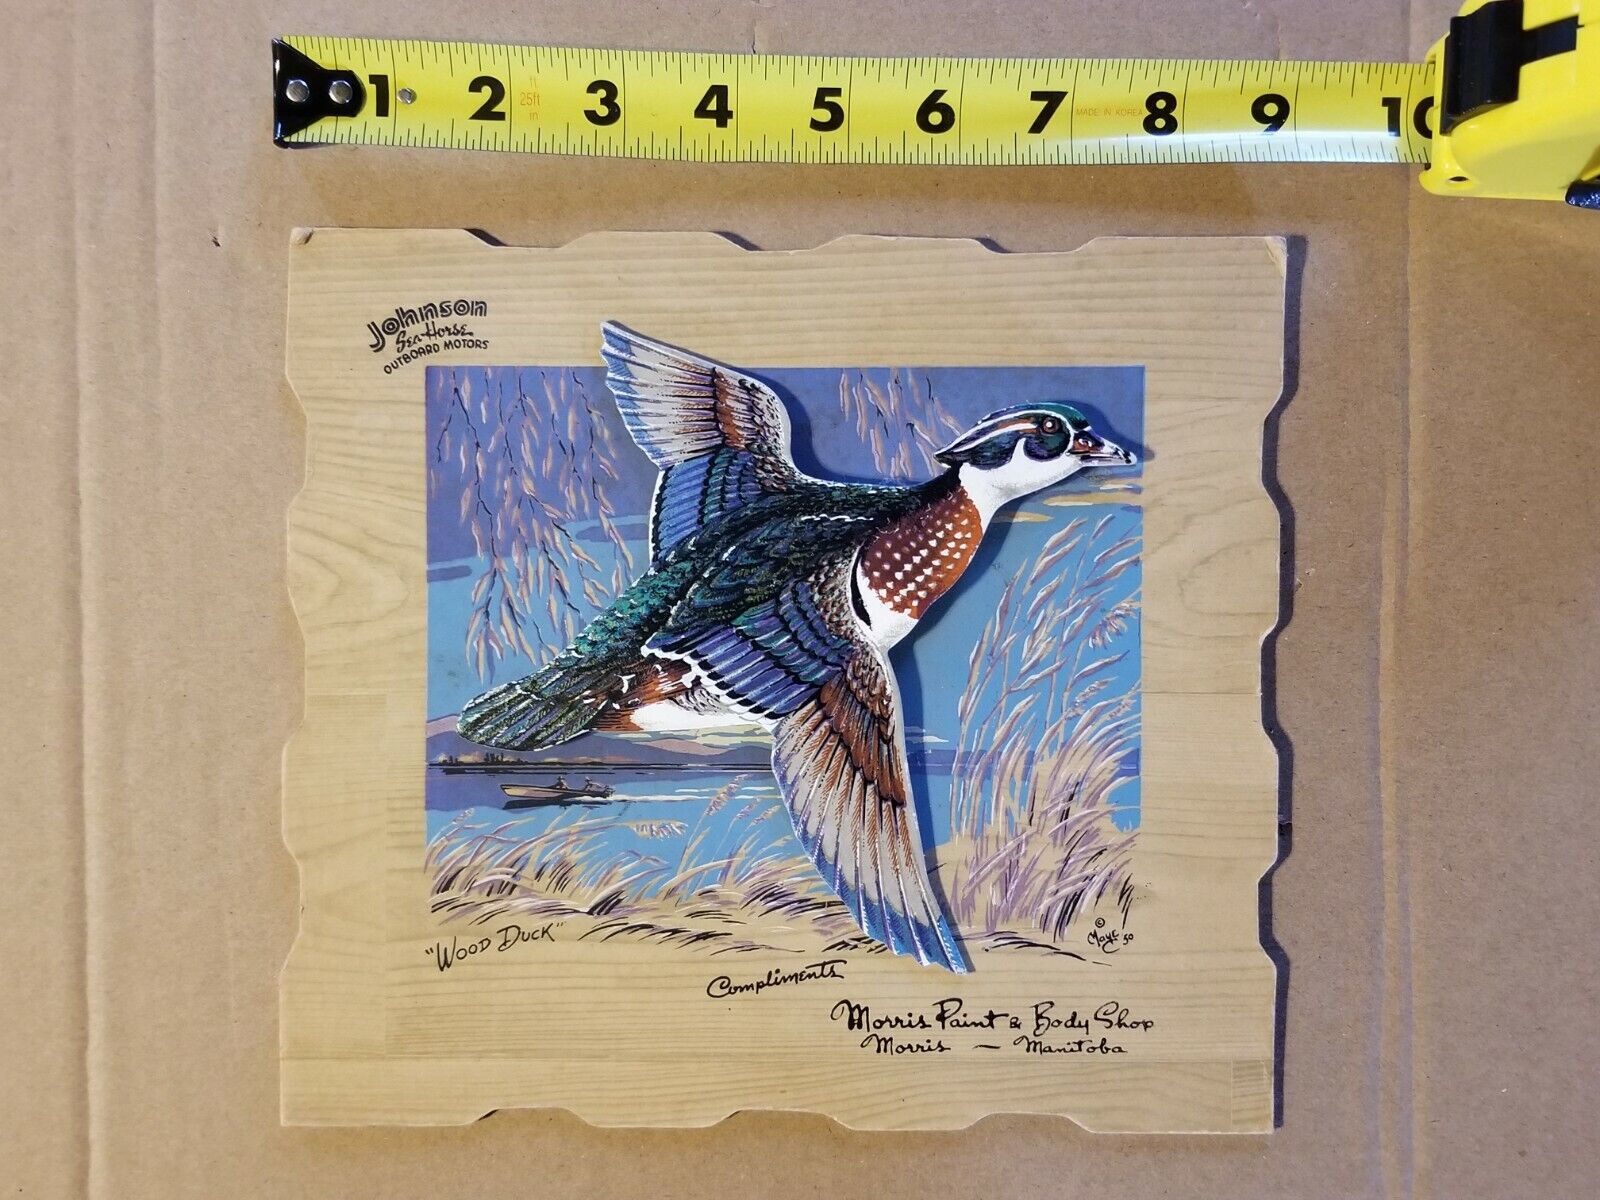 Vtg 1950s OMC Johnson Sea Horse Wood Duck Calendar Advertising Art BEAUTIFUL